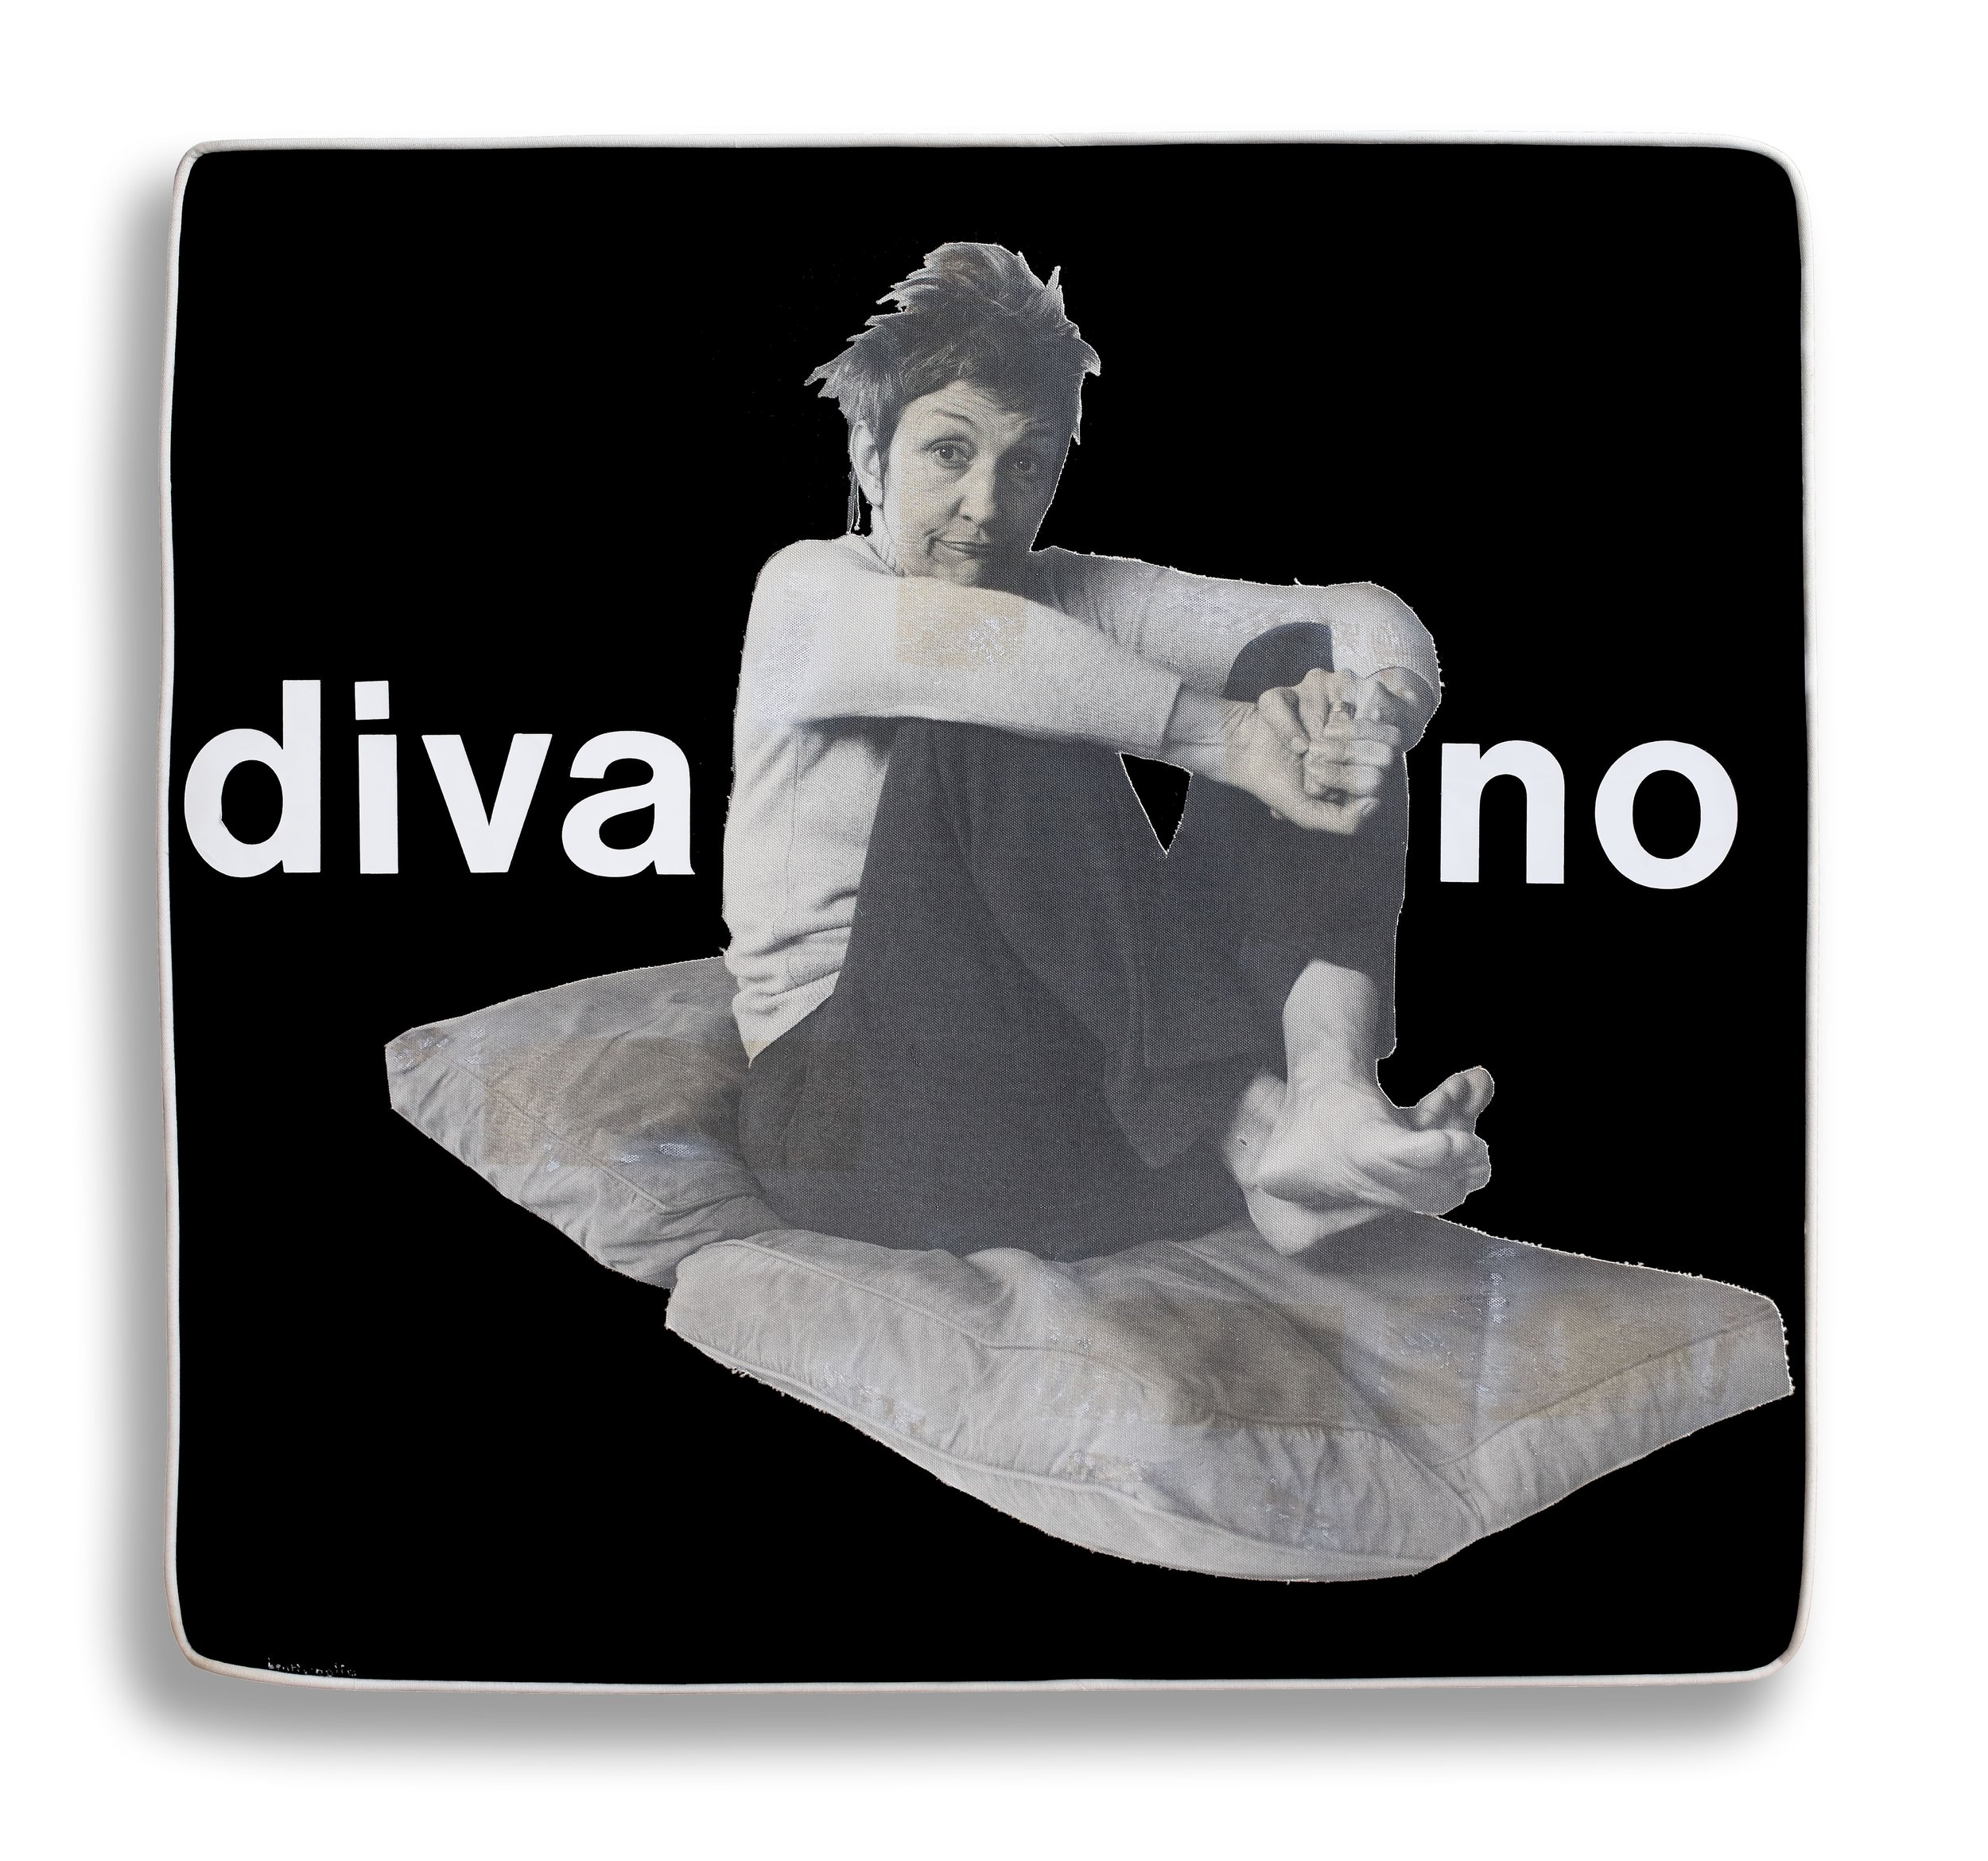 Diva-no, 1973
Collage on sofa cushion in plexiglas box